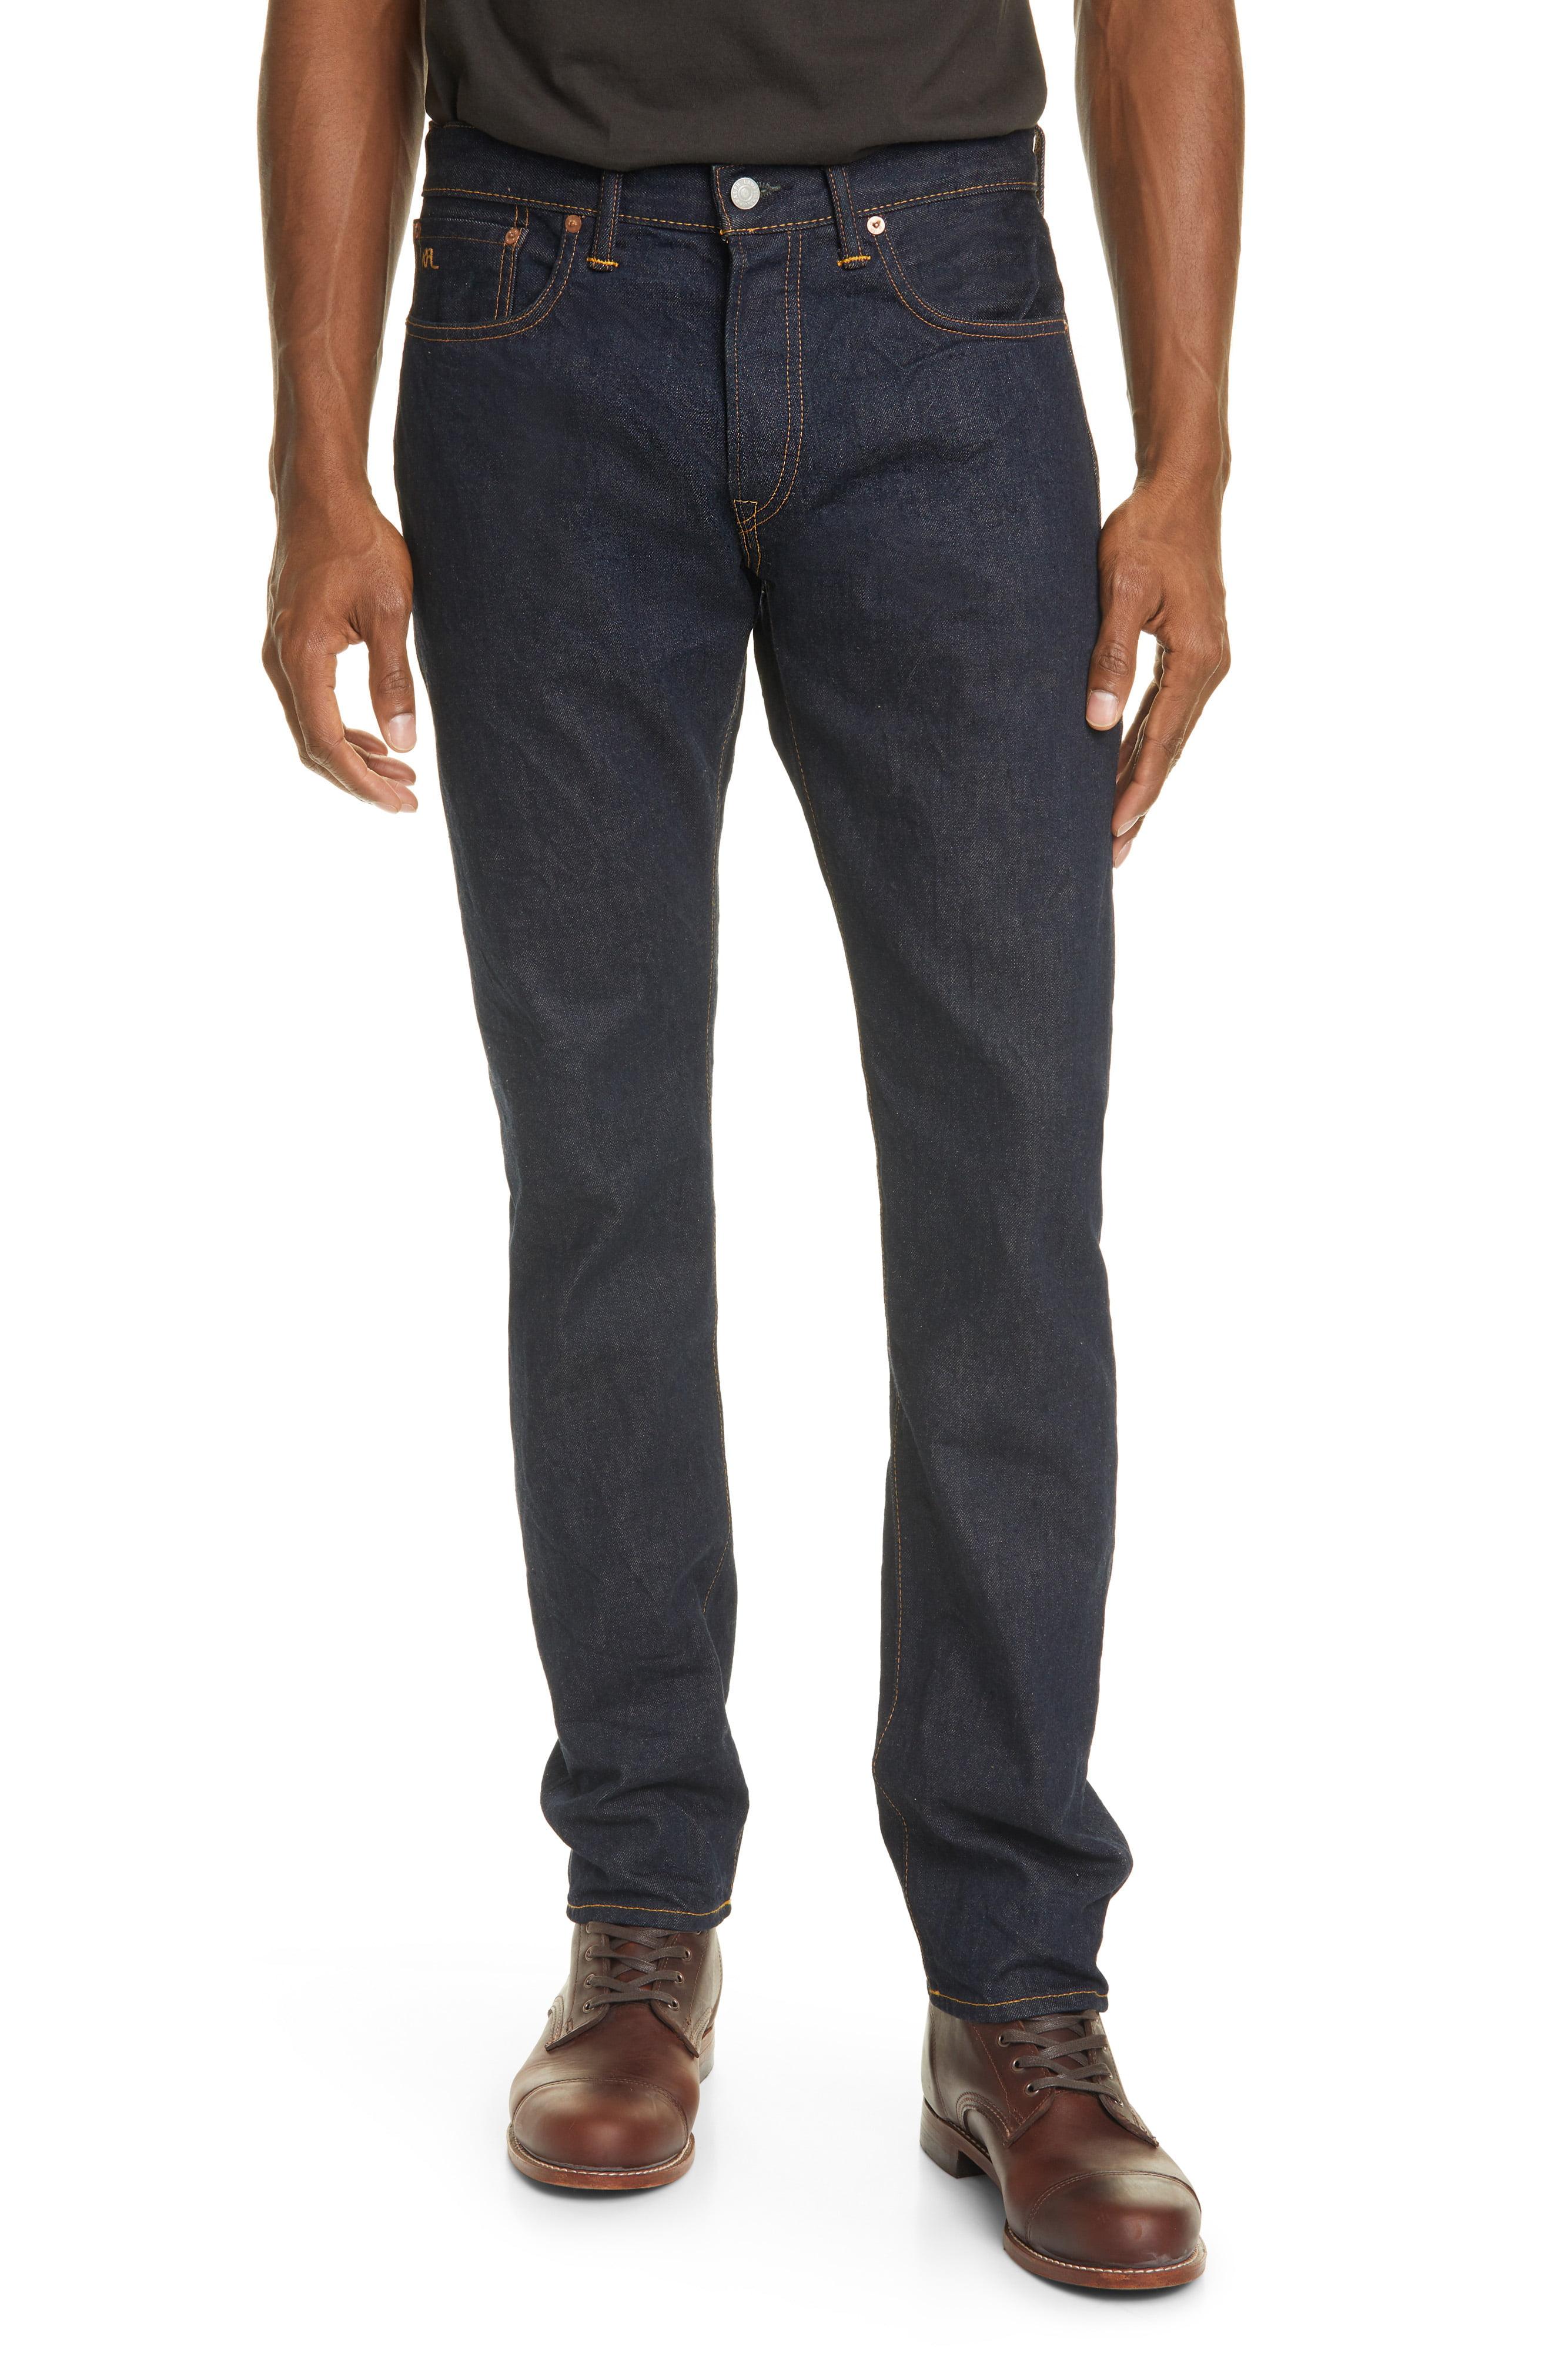 RRL Denim Slim Fit Selvedge Jeans in Blue for Men - Lyst